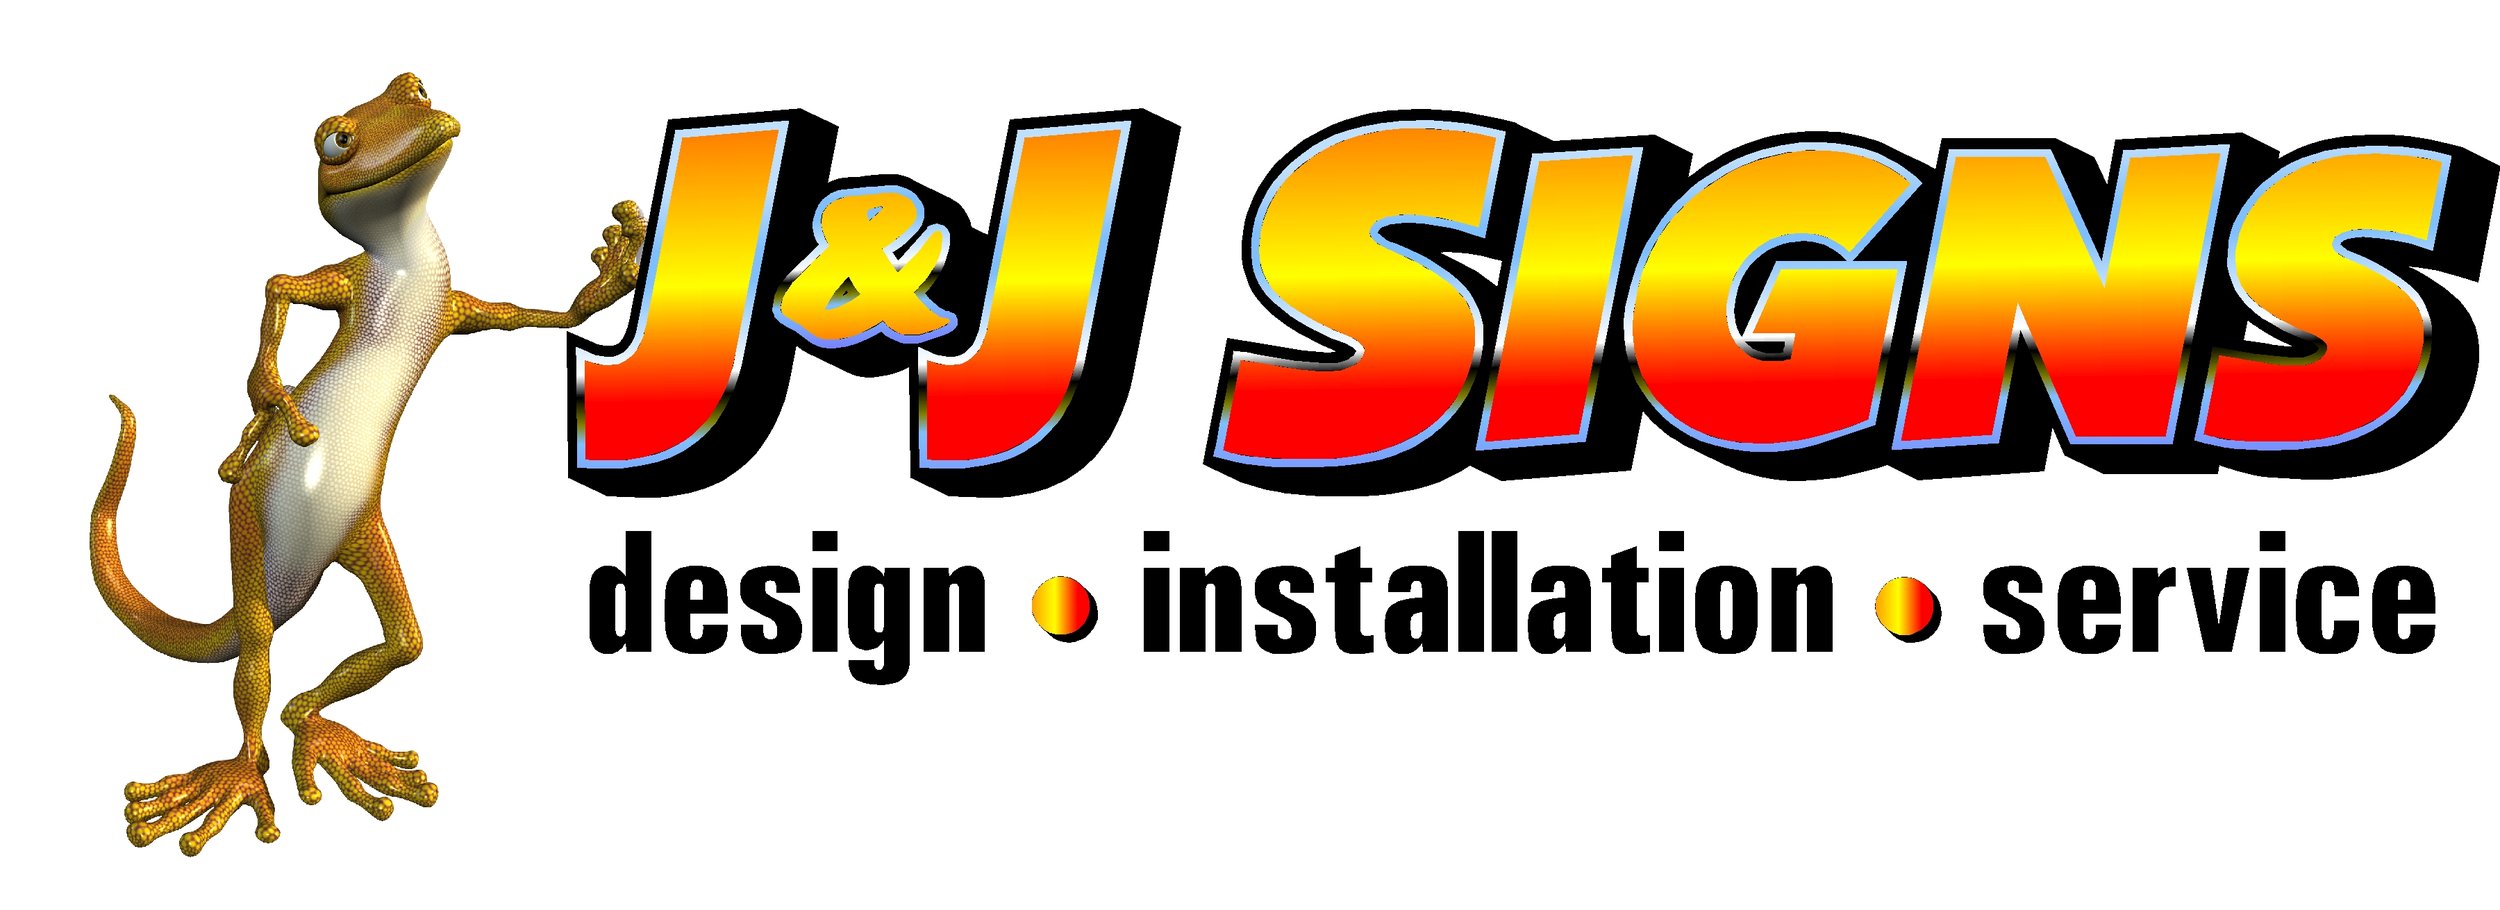 j&j high res logo 1.jpg